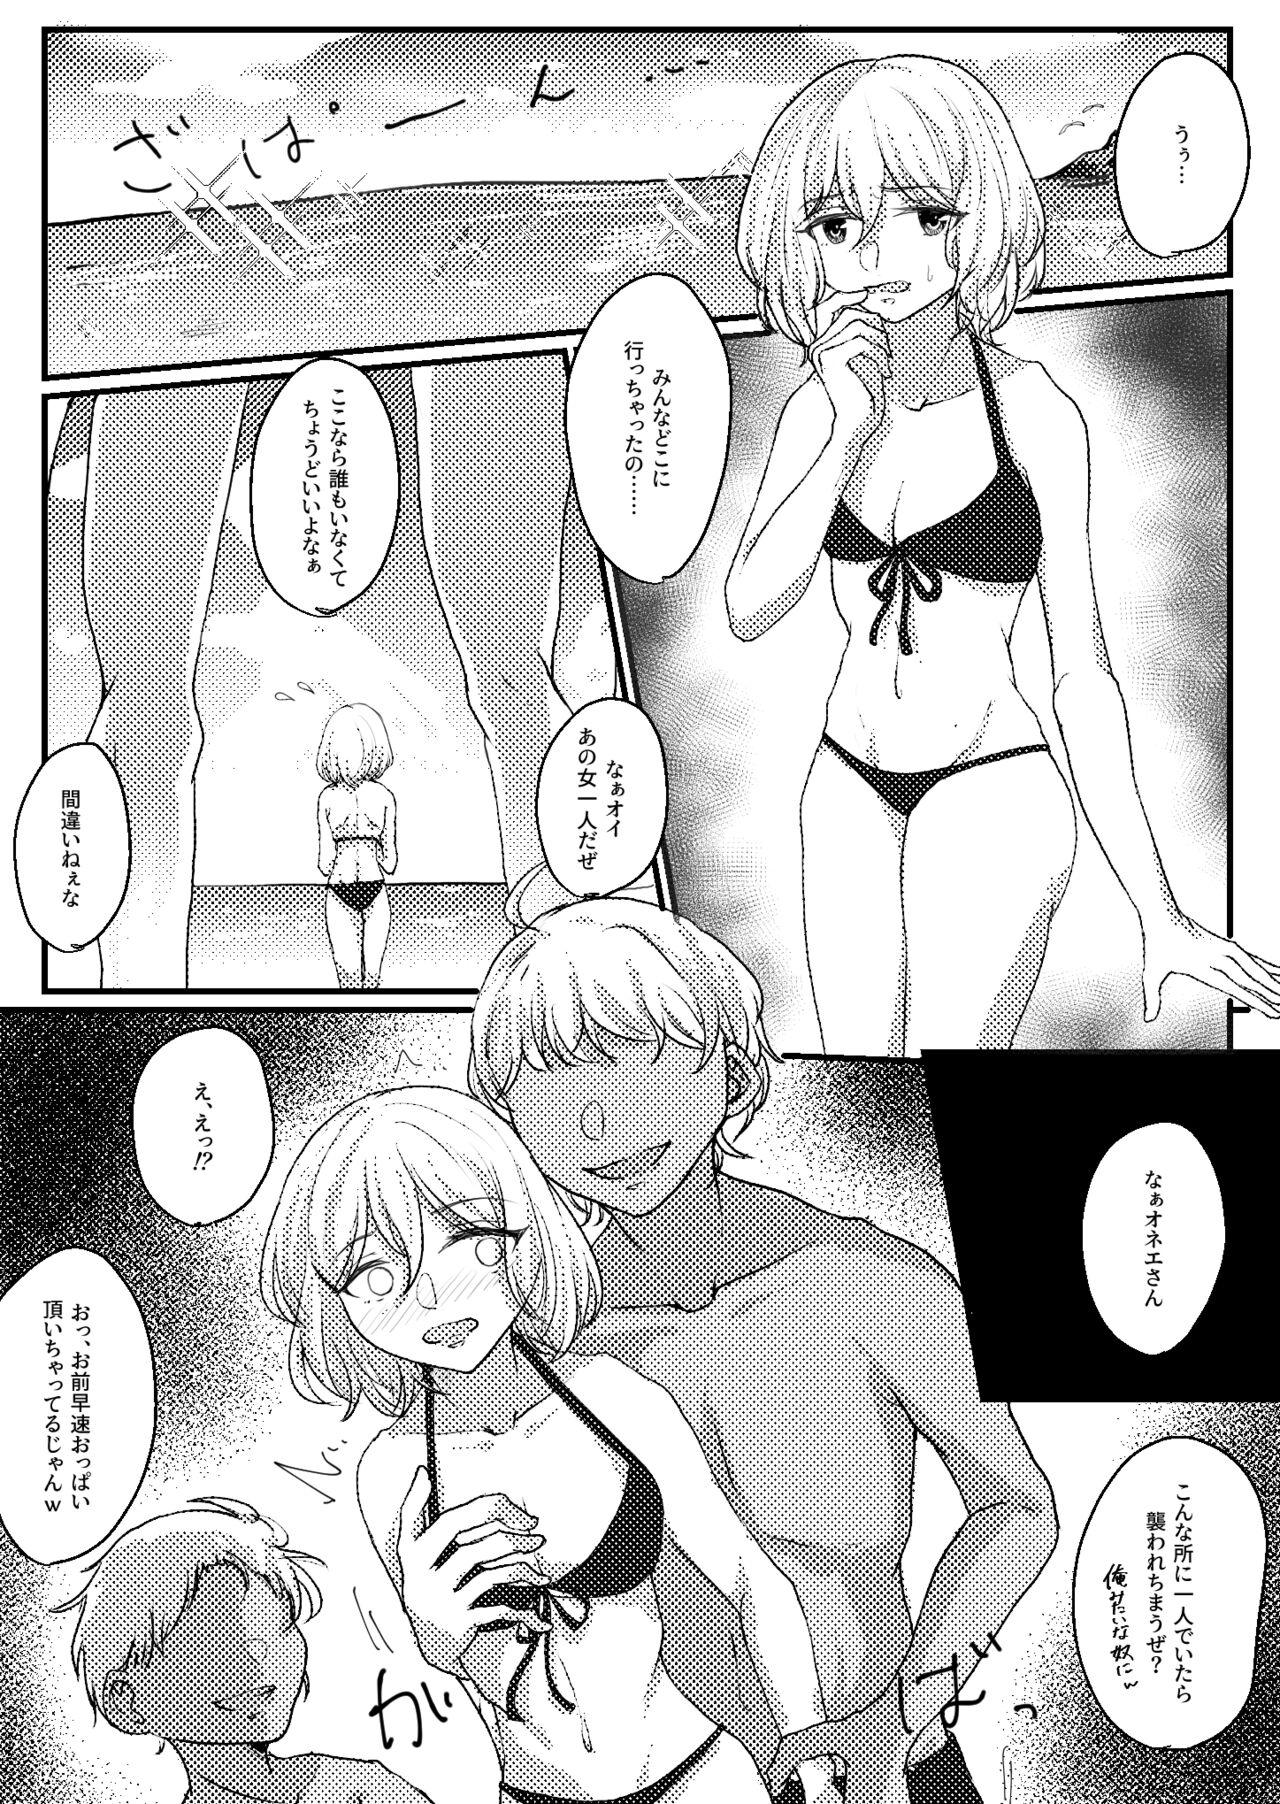 Teenage Mashiro beach sex commission - Bang dream Gay Public - Picture 1